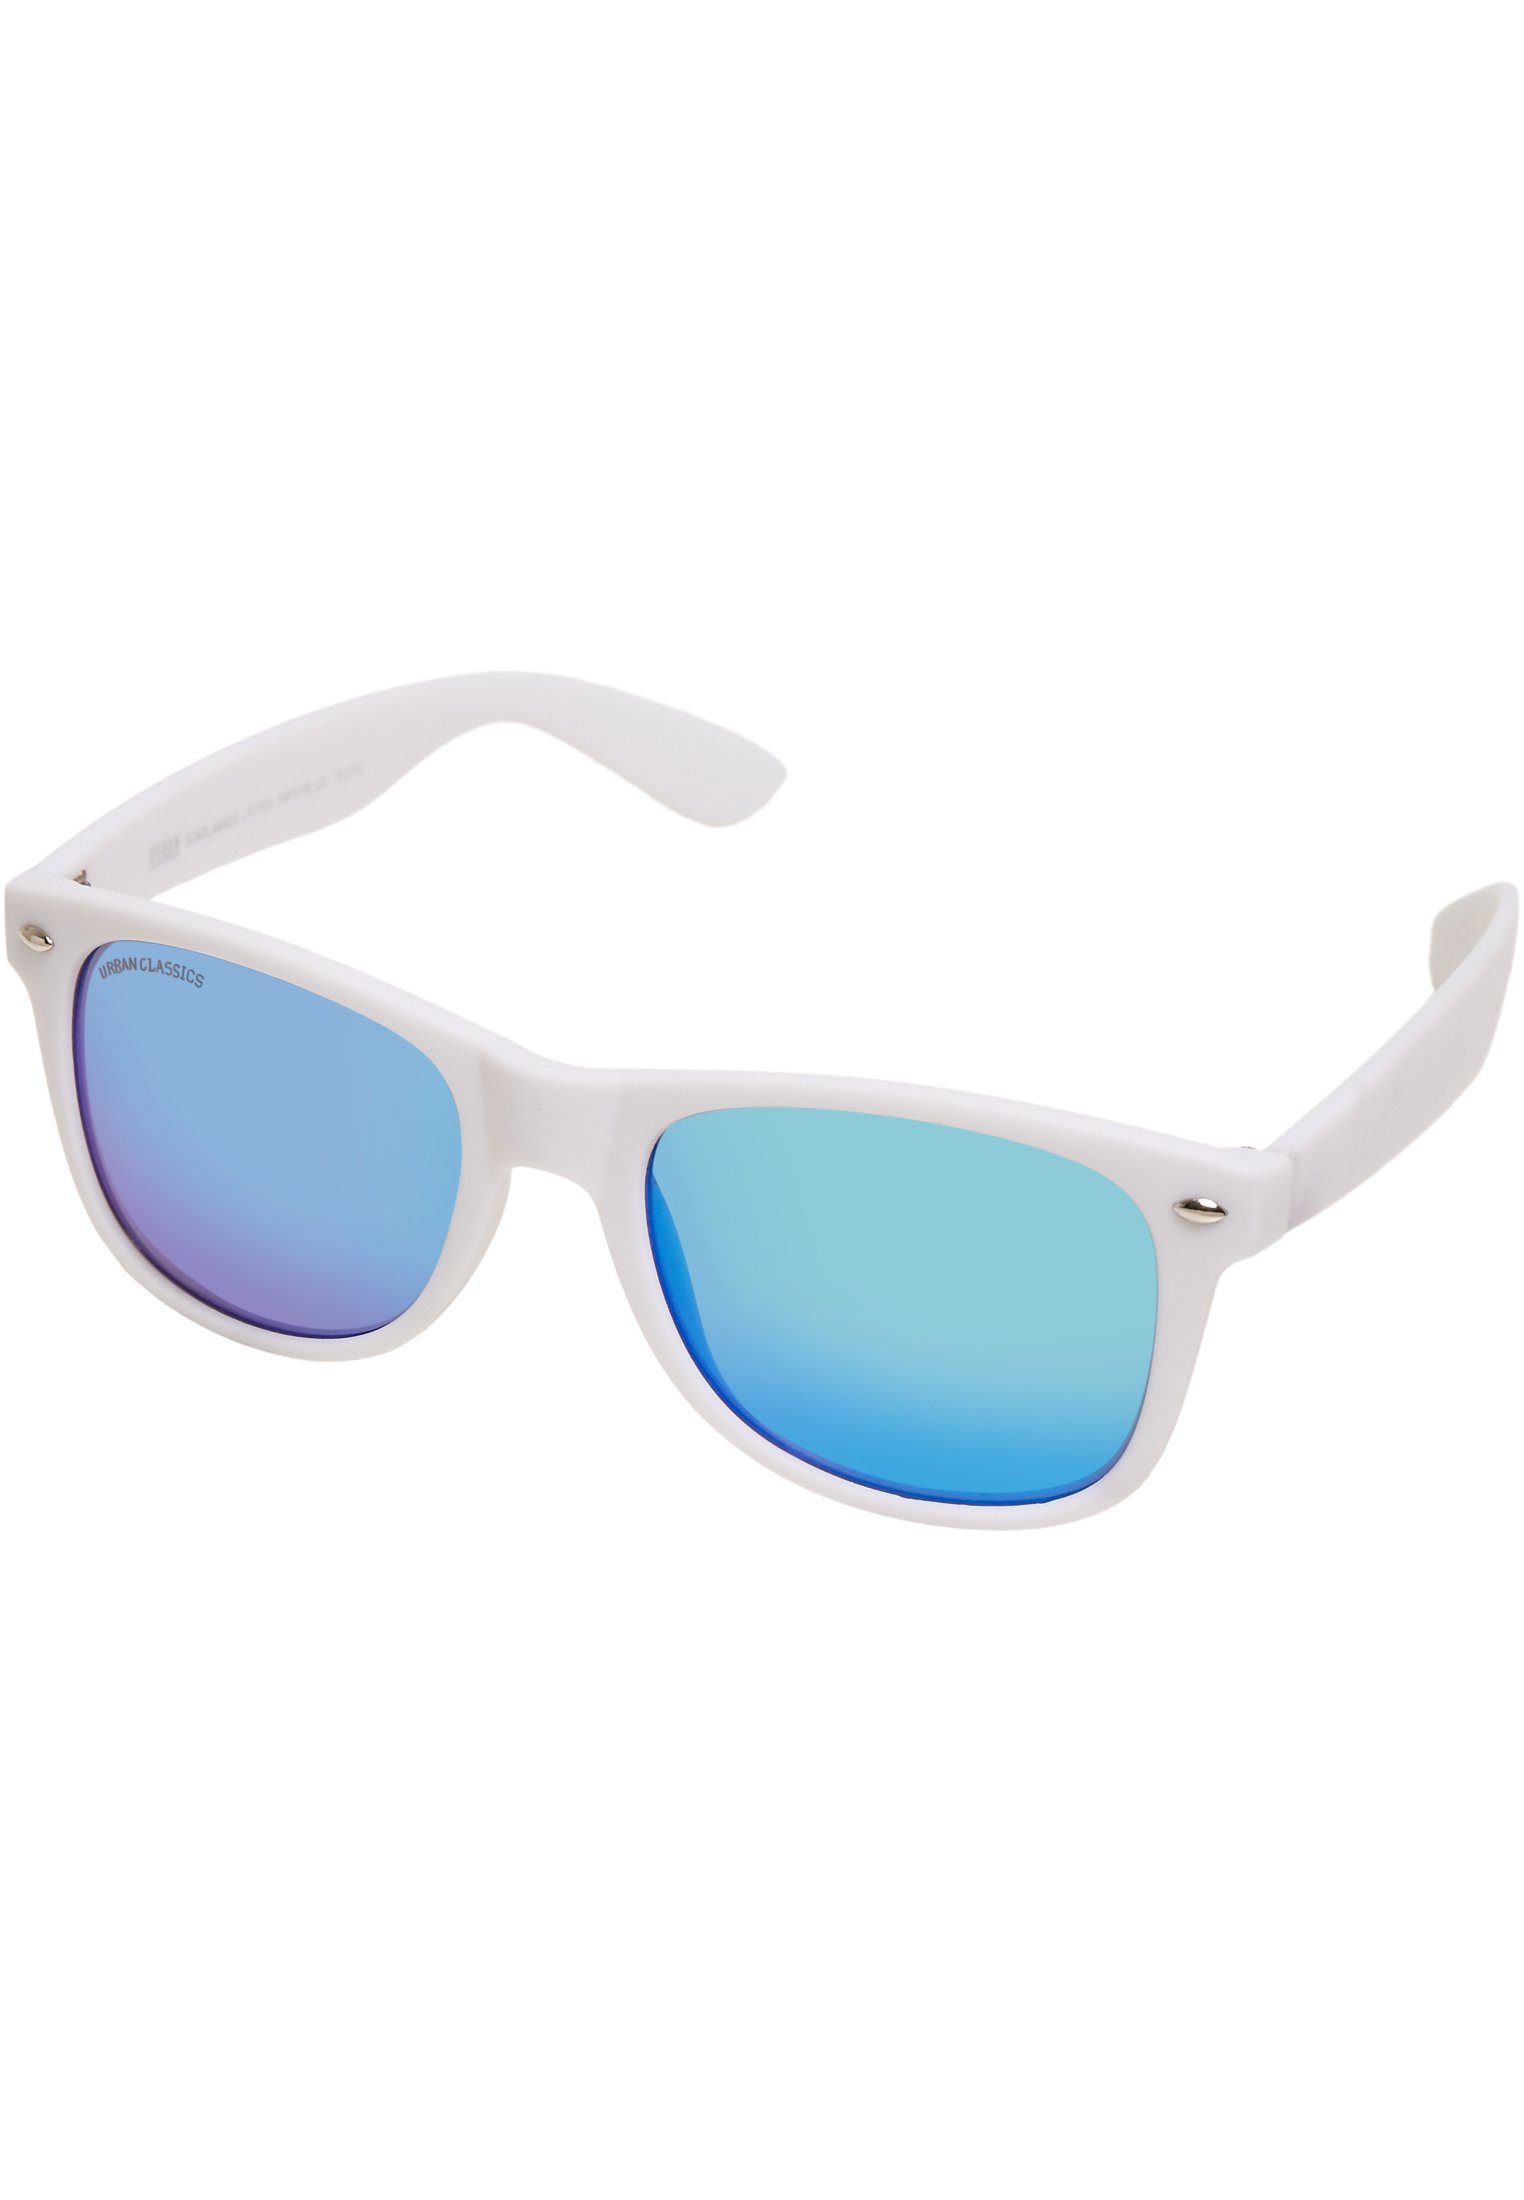 URBAN CLASSICS Sonnenbrille Accessoires Likoma Mirror white/blue Sunglasses UC